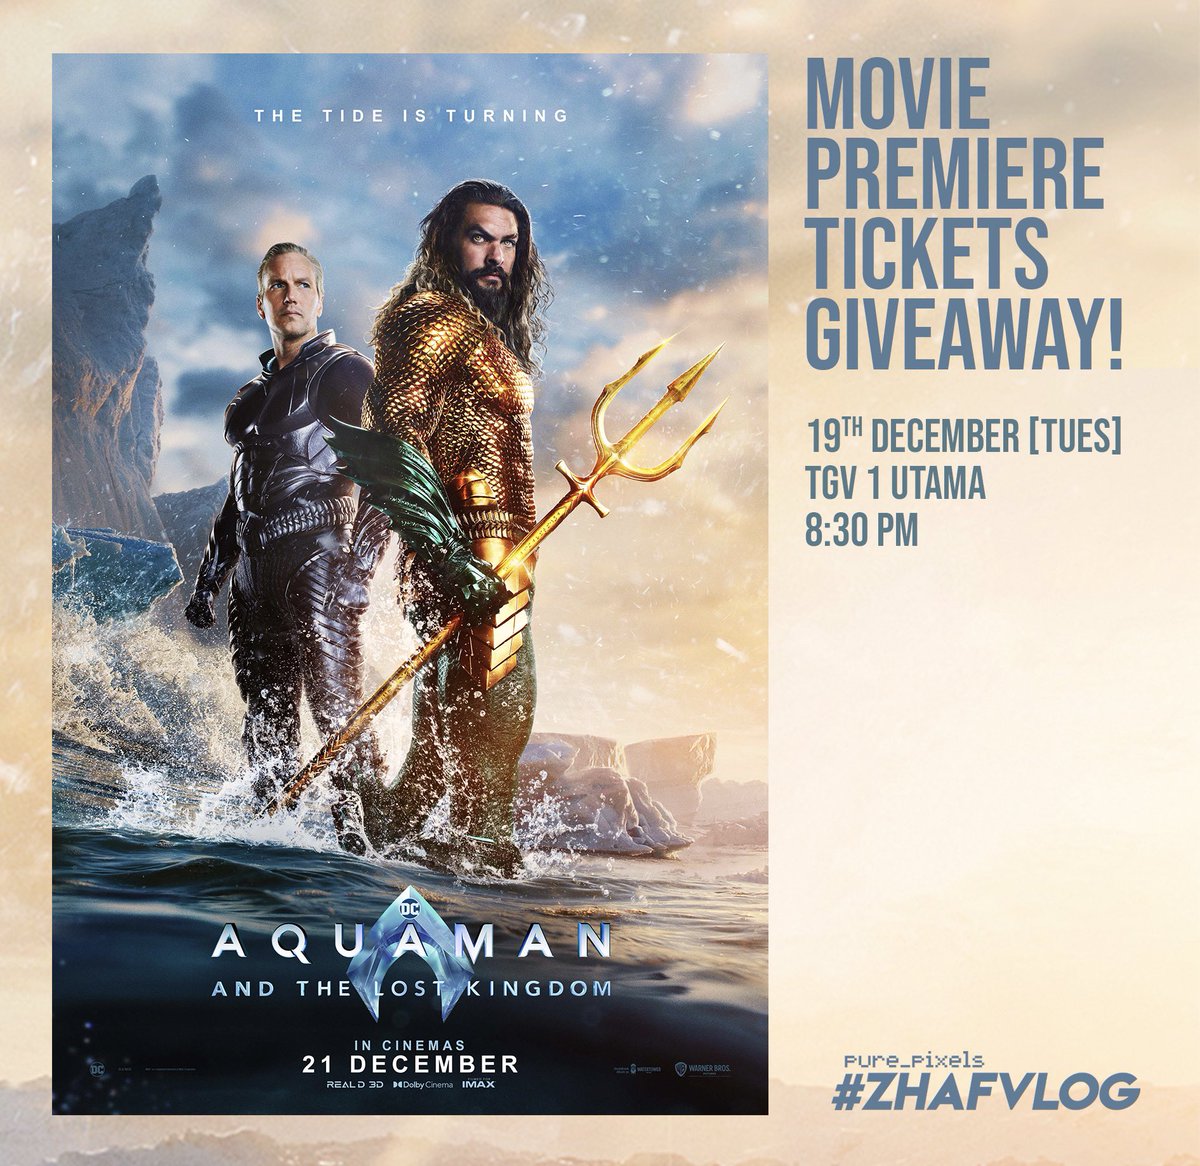 Aquaman & The Lost Kingdom - Exclusive Premiere Screening Tickets Giveaway! forms.gle/1KK5Tn6raJk1aK… #ZHAFVLOG #MulutPuakaGiveaway #MulutPuakaPremiere #Aquaman #TheLostKingdom